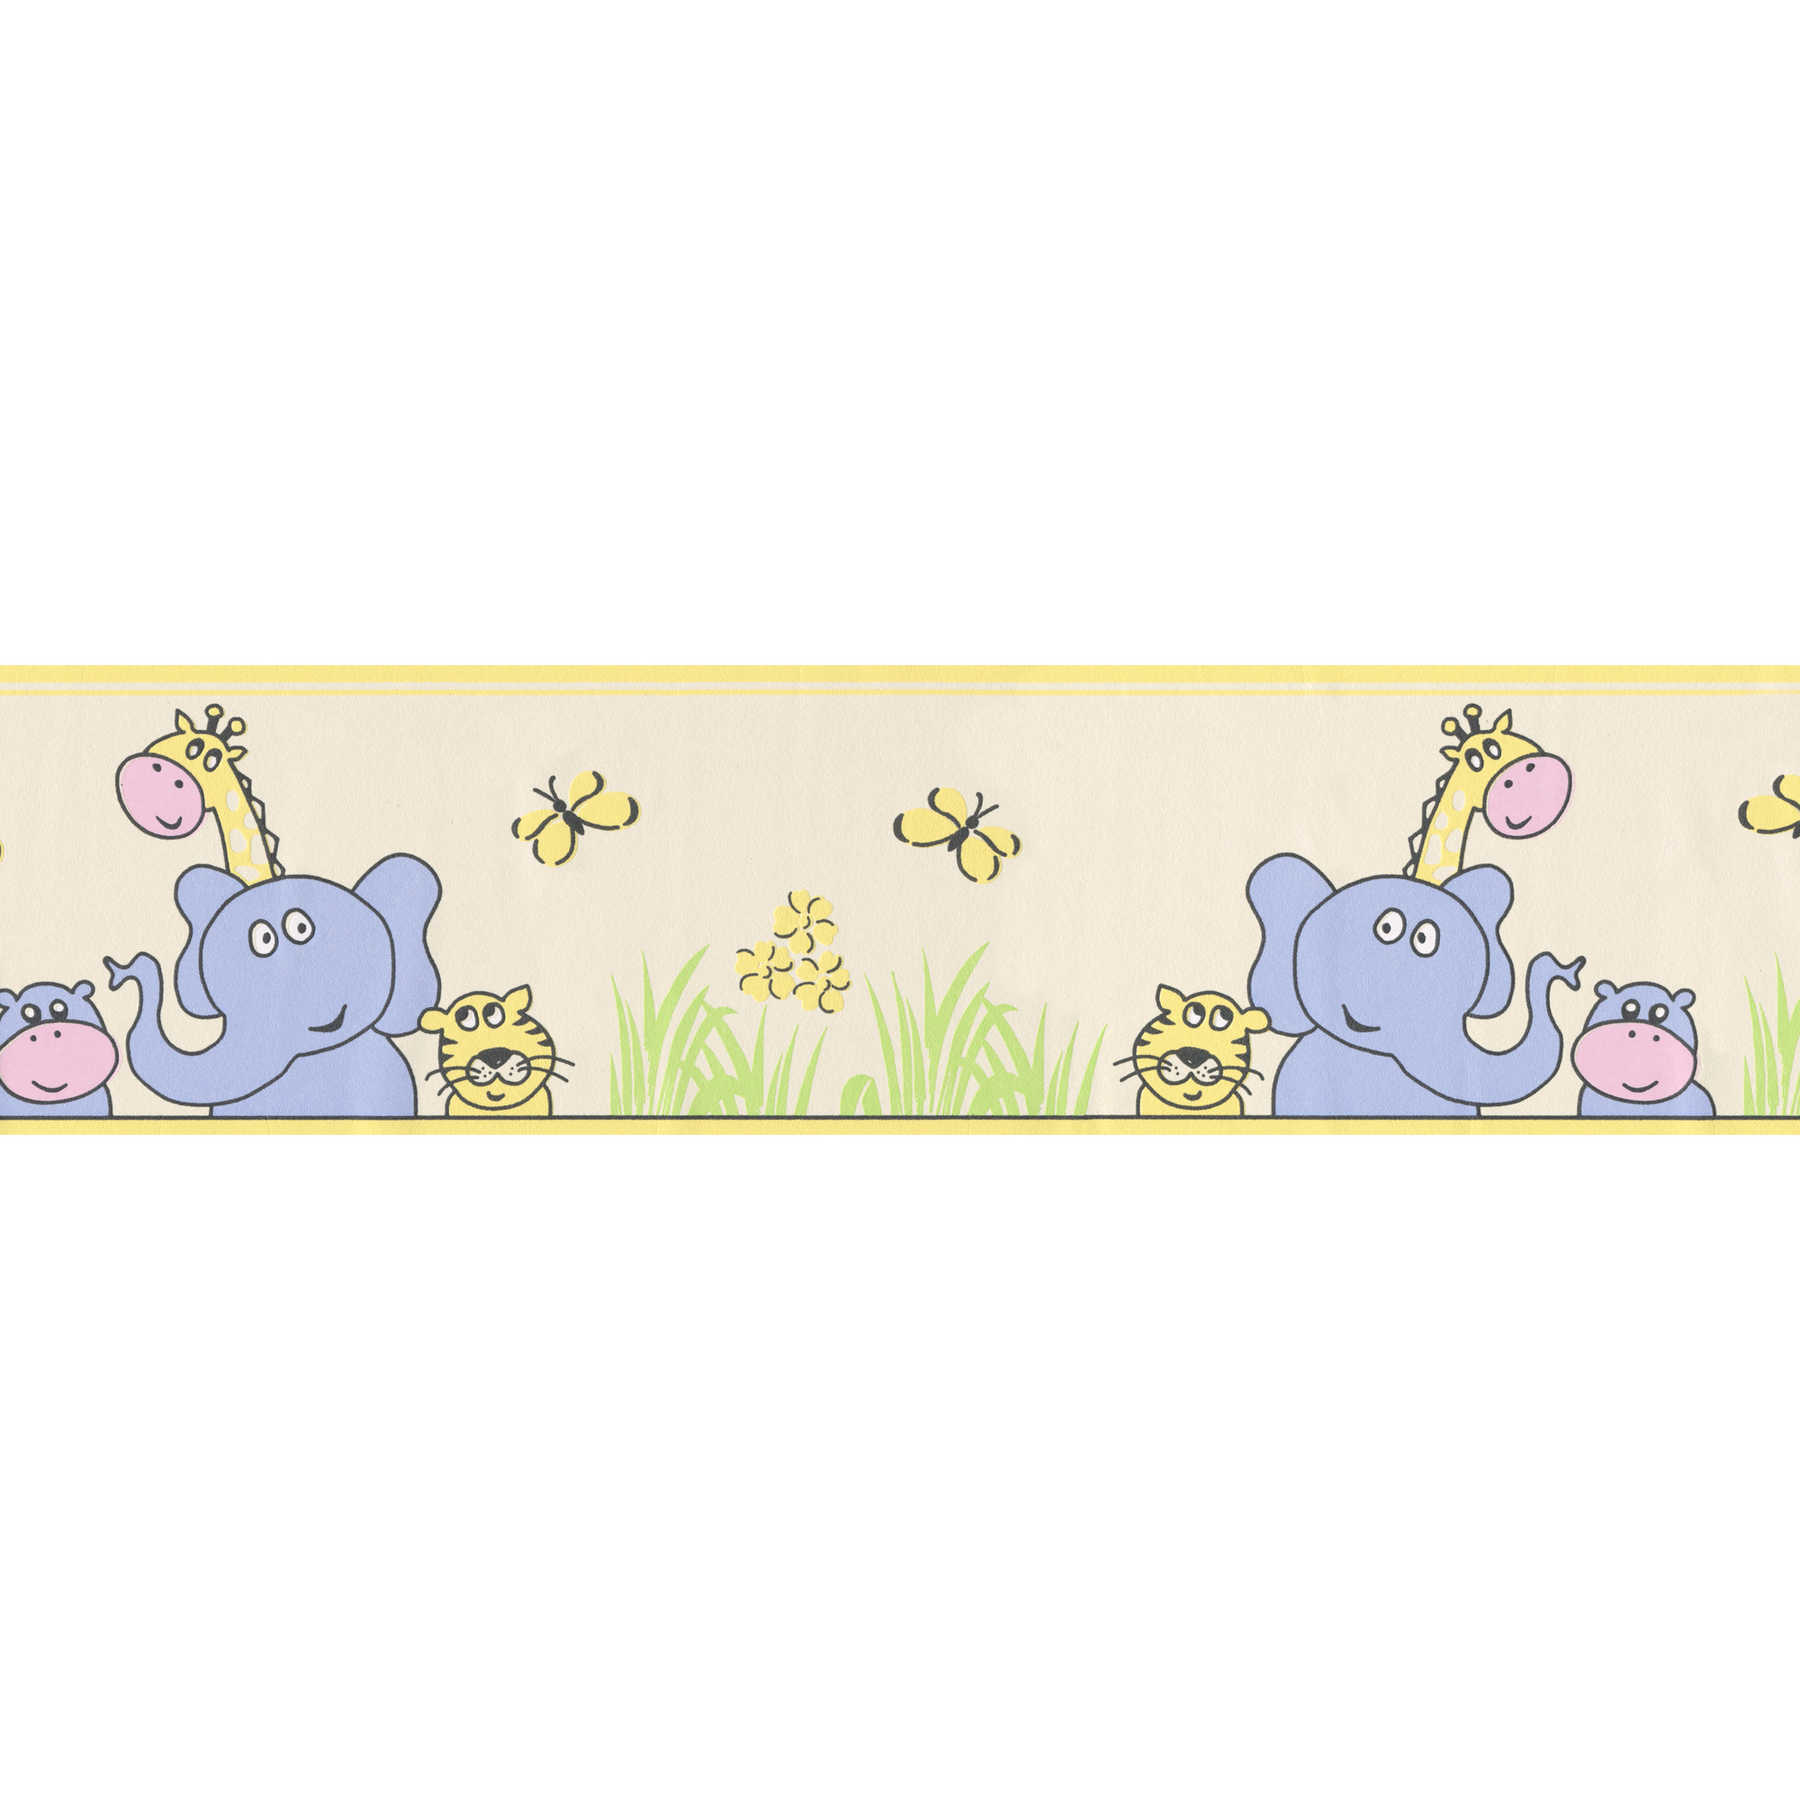 Bordure de chambre d'enfant éléphant & girafe - jaune, bleu, vert
